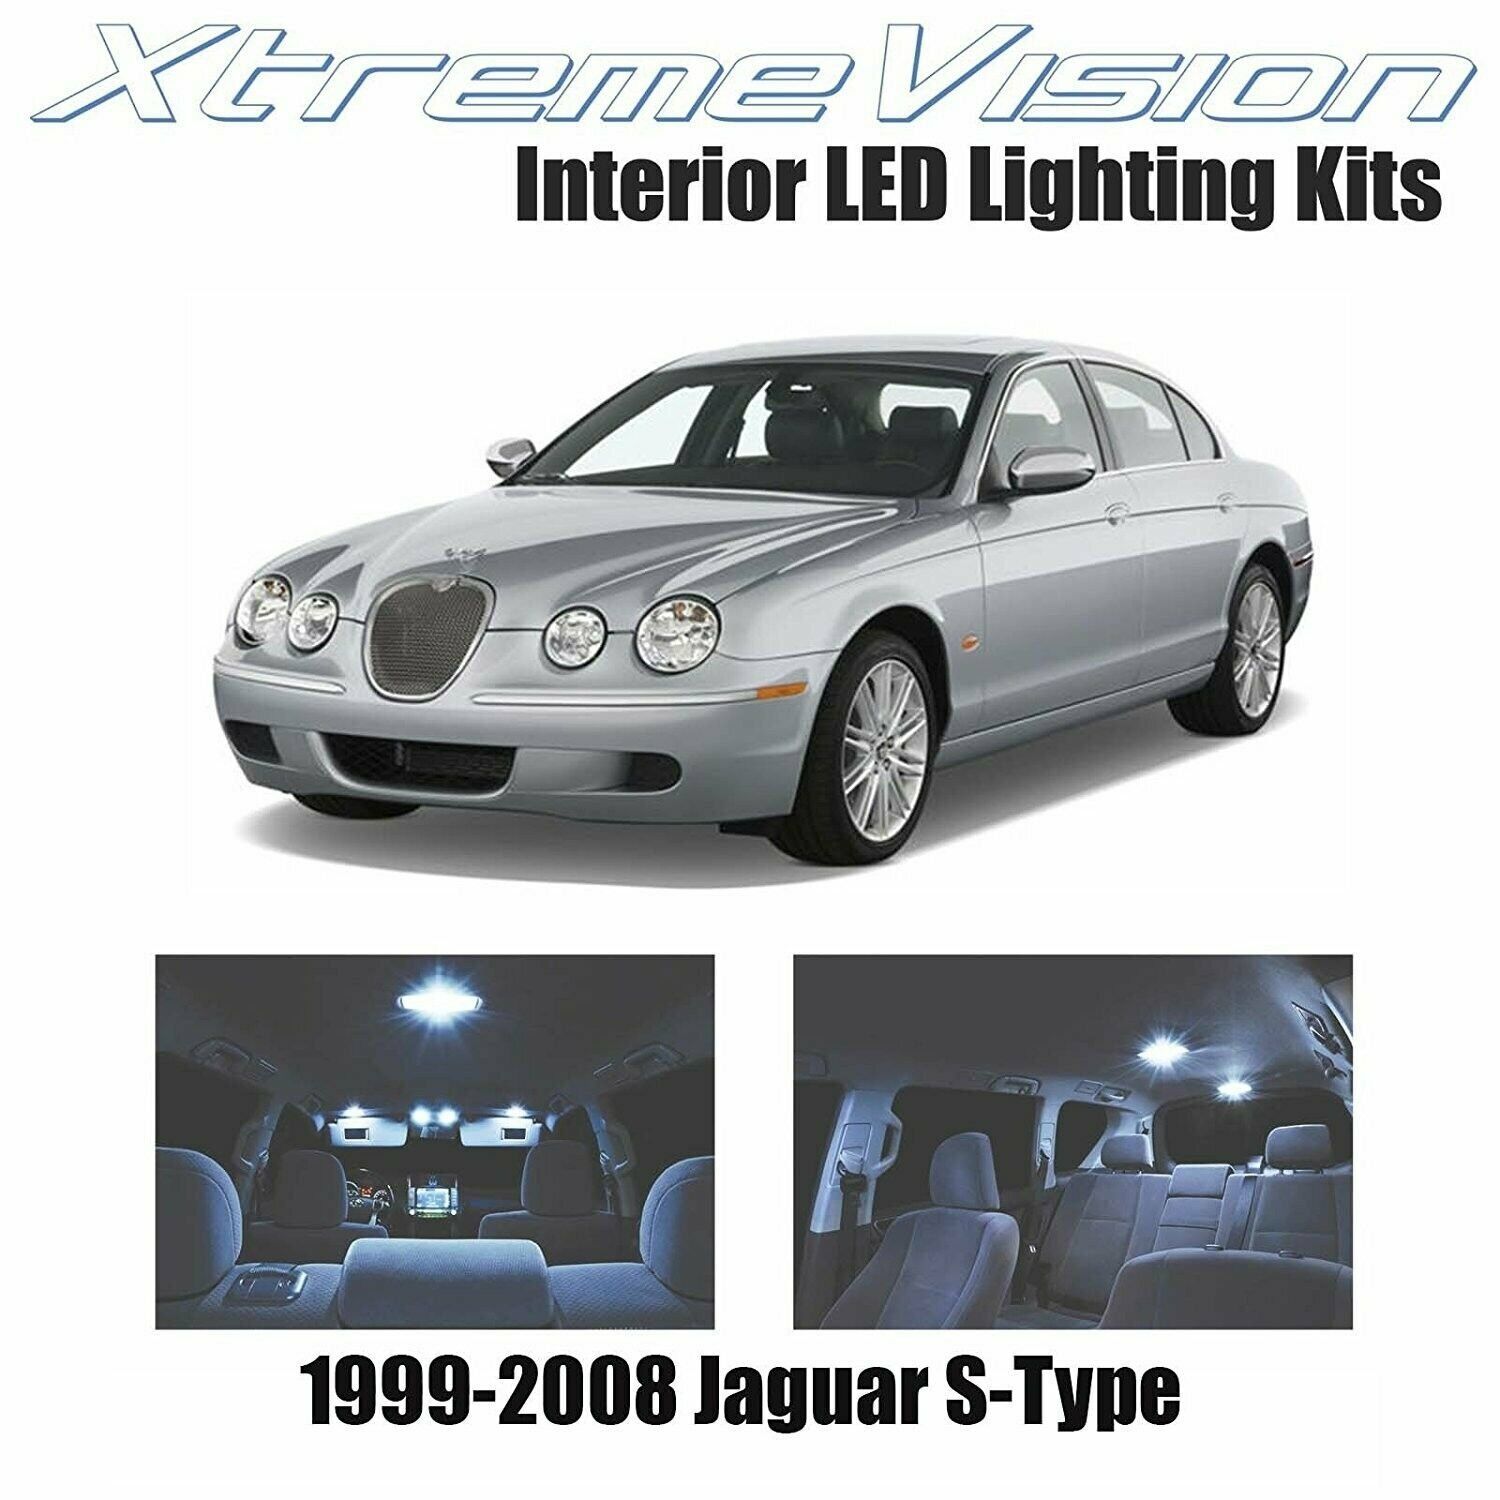 XtremeVision Interior LED for Jaguar S-Type 1999-2008 (14 PCS) Cool White